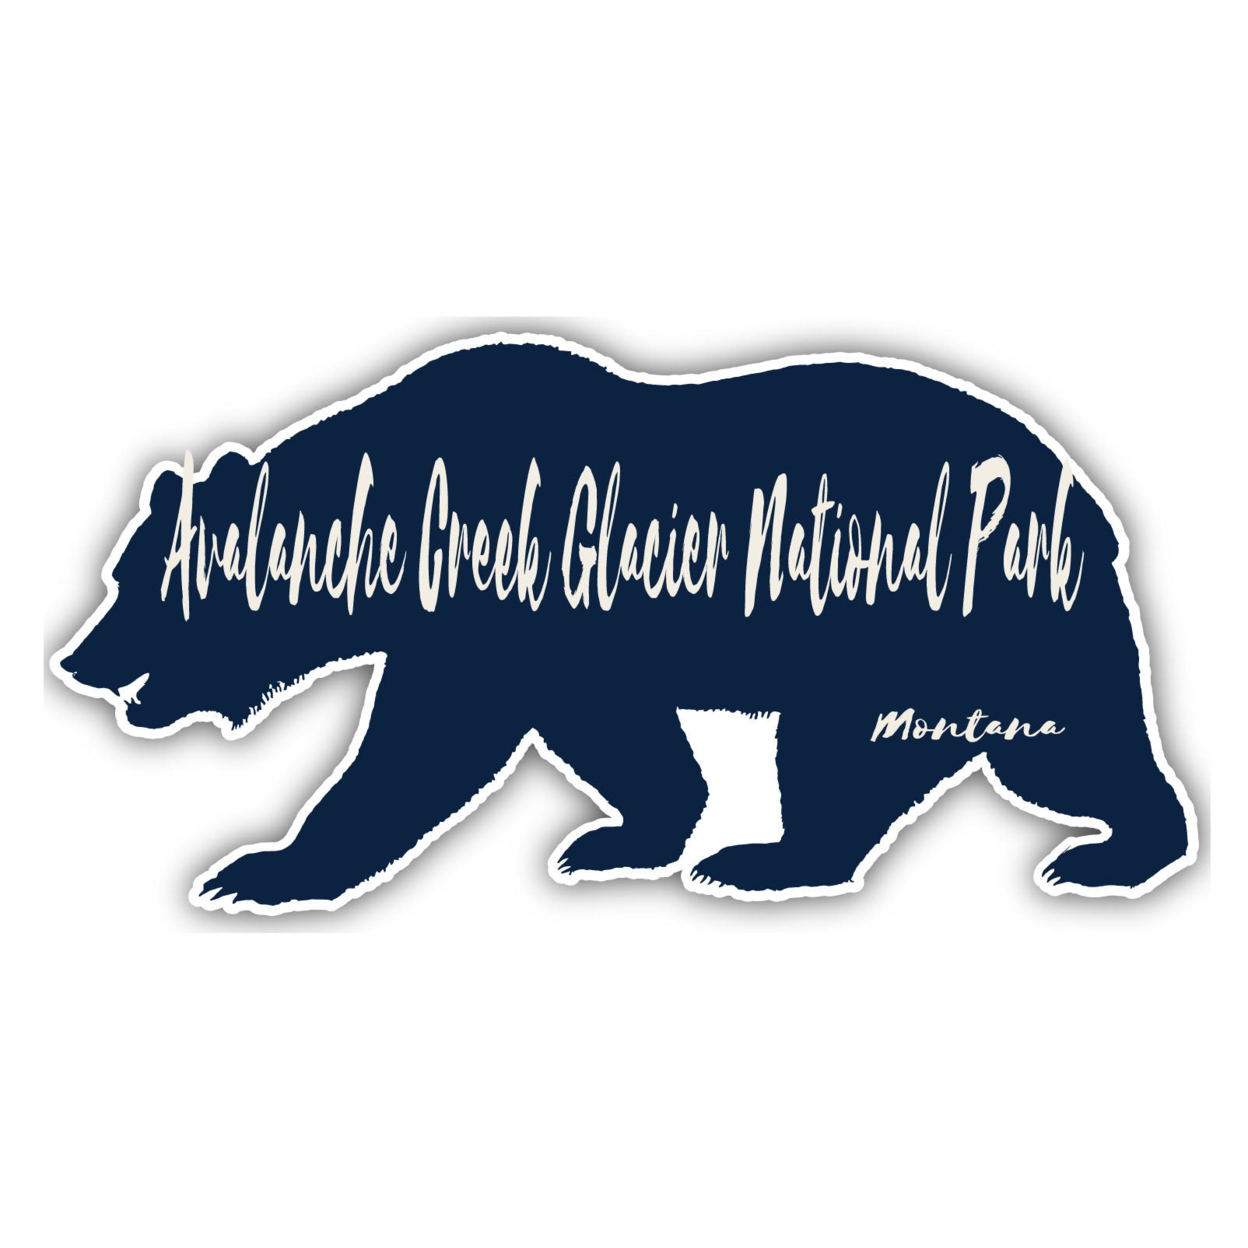 Avalanche Creek Glacier National Park Montana Souvenir Decorative Stickers (Choose Theme And Size) - 4-Pack, 6-Inch, Bear